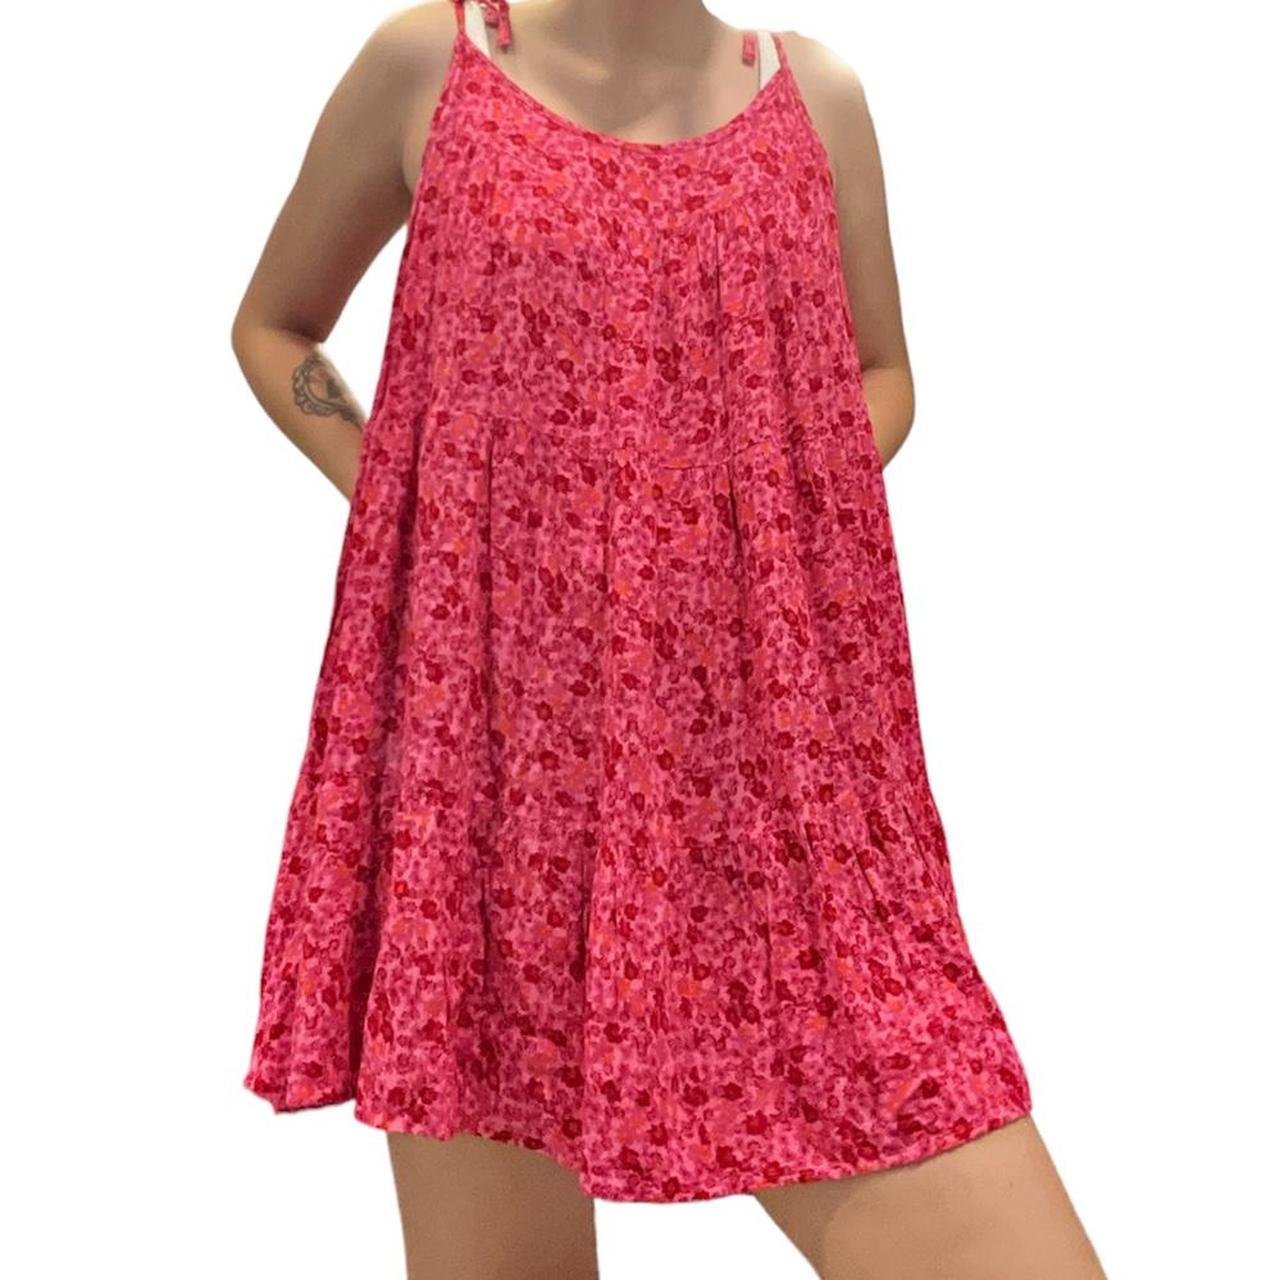 wild fable pink and orange floral summer dress size... - Depop